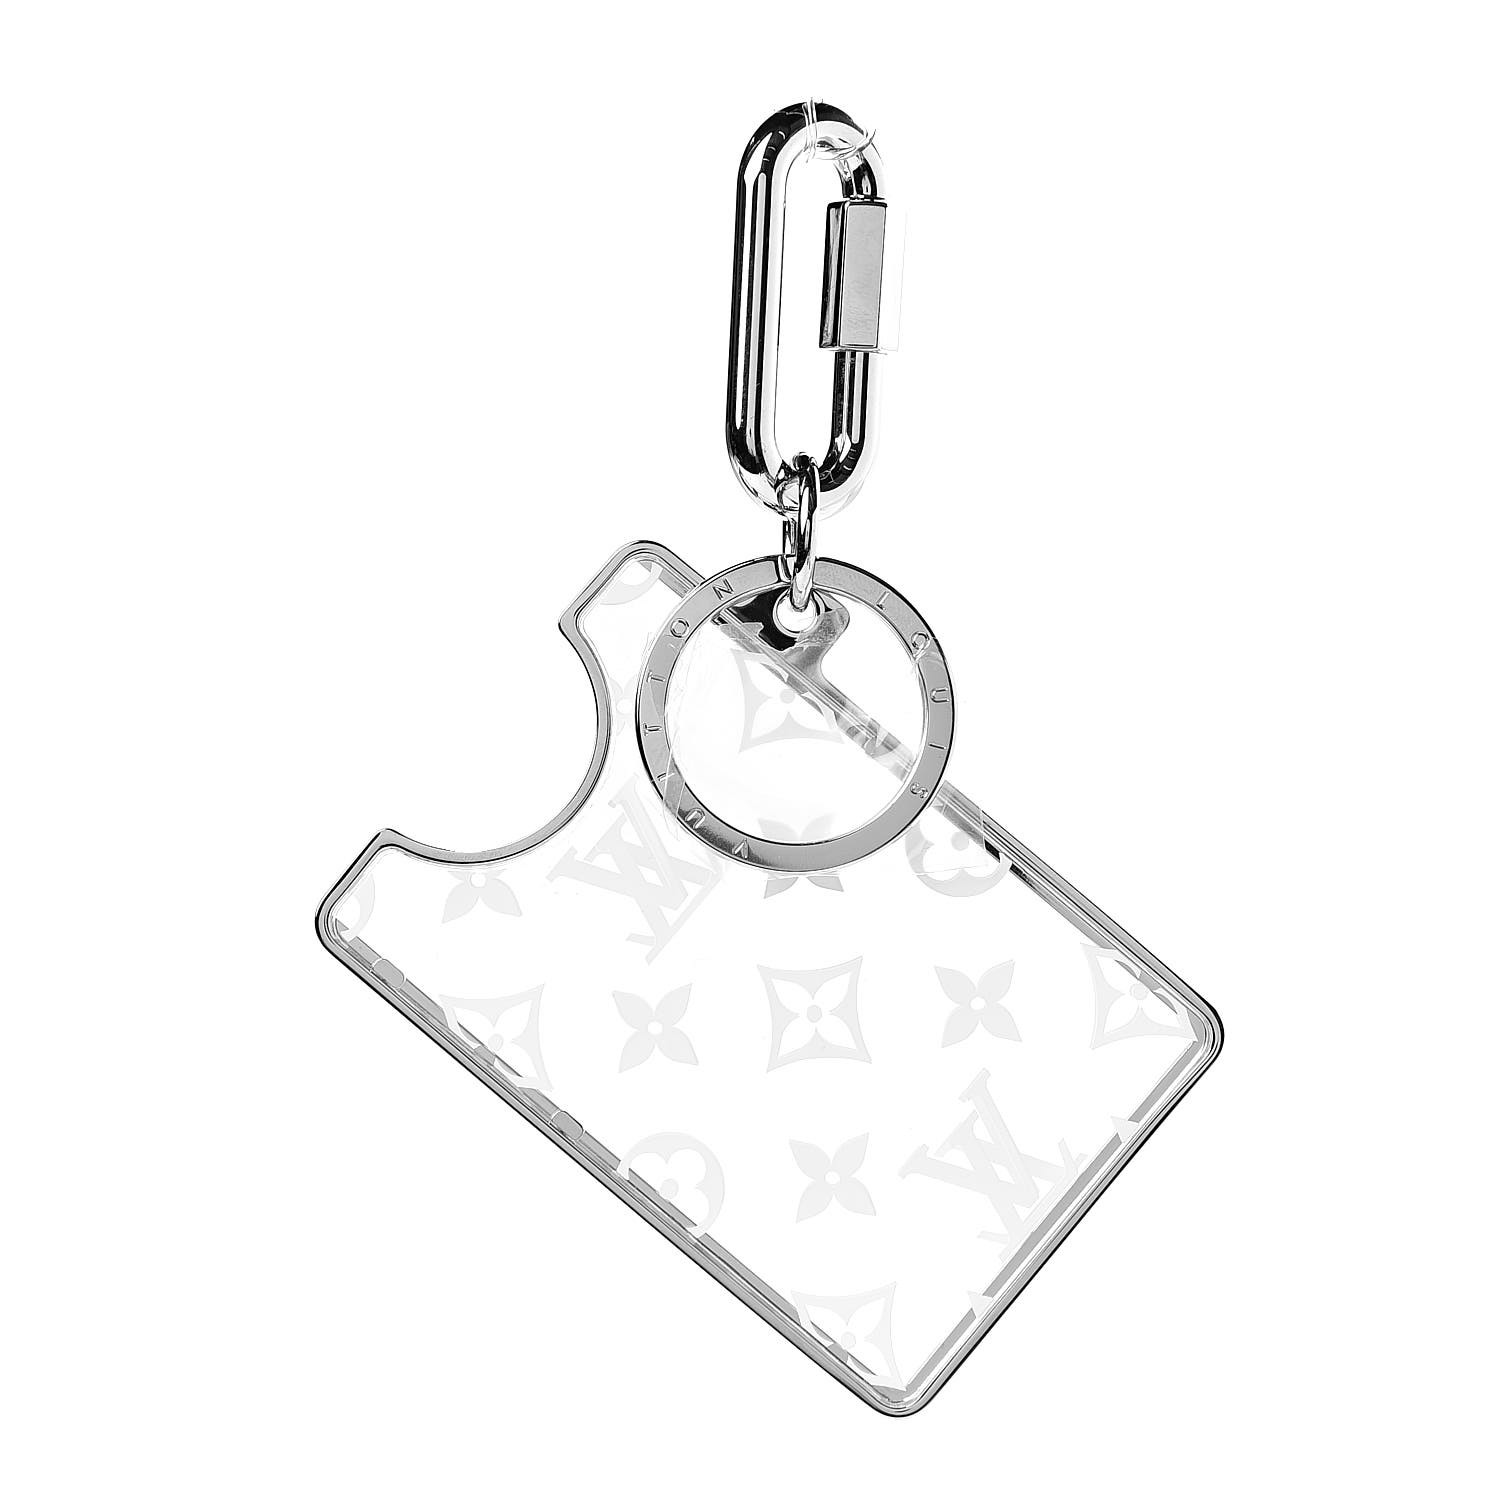 Louis Vuitton MONOGRAM Lv prism id holder bag charm and key holder (M69299)